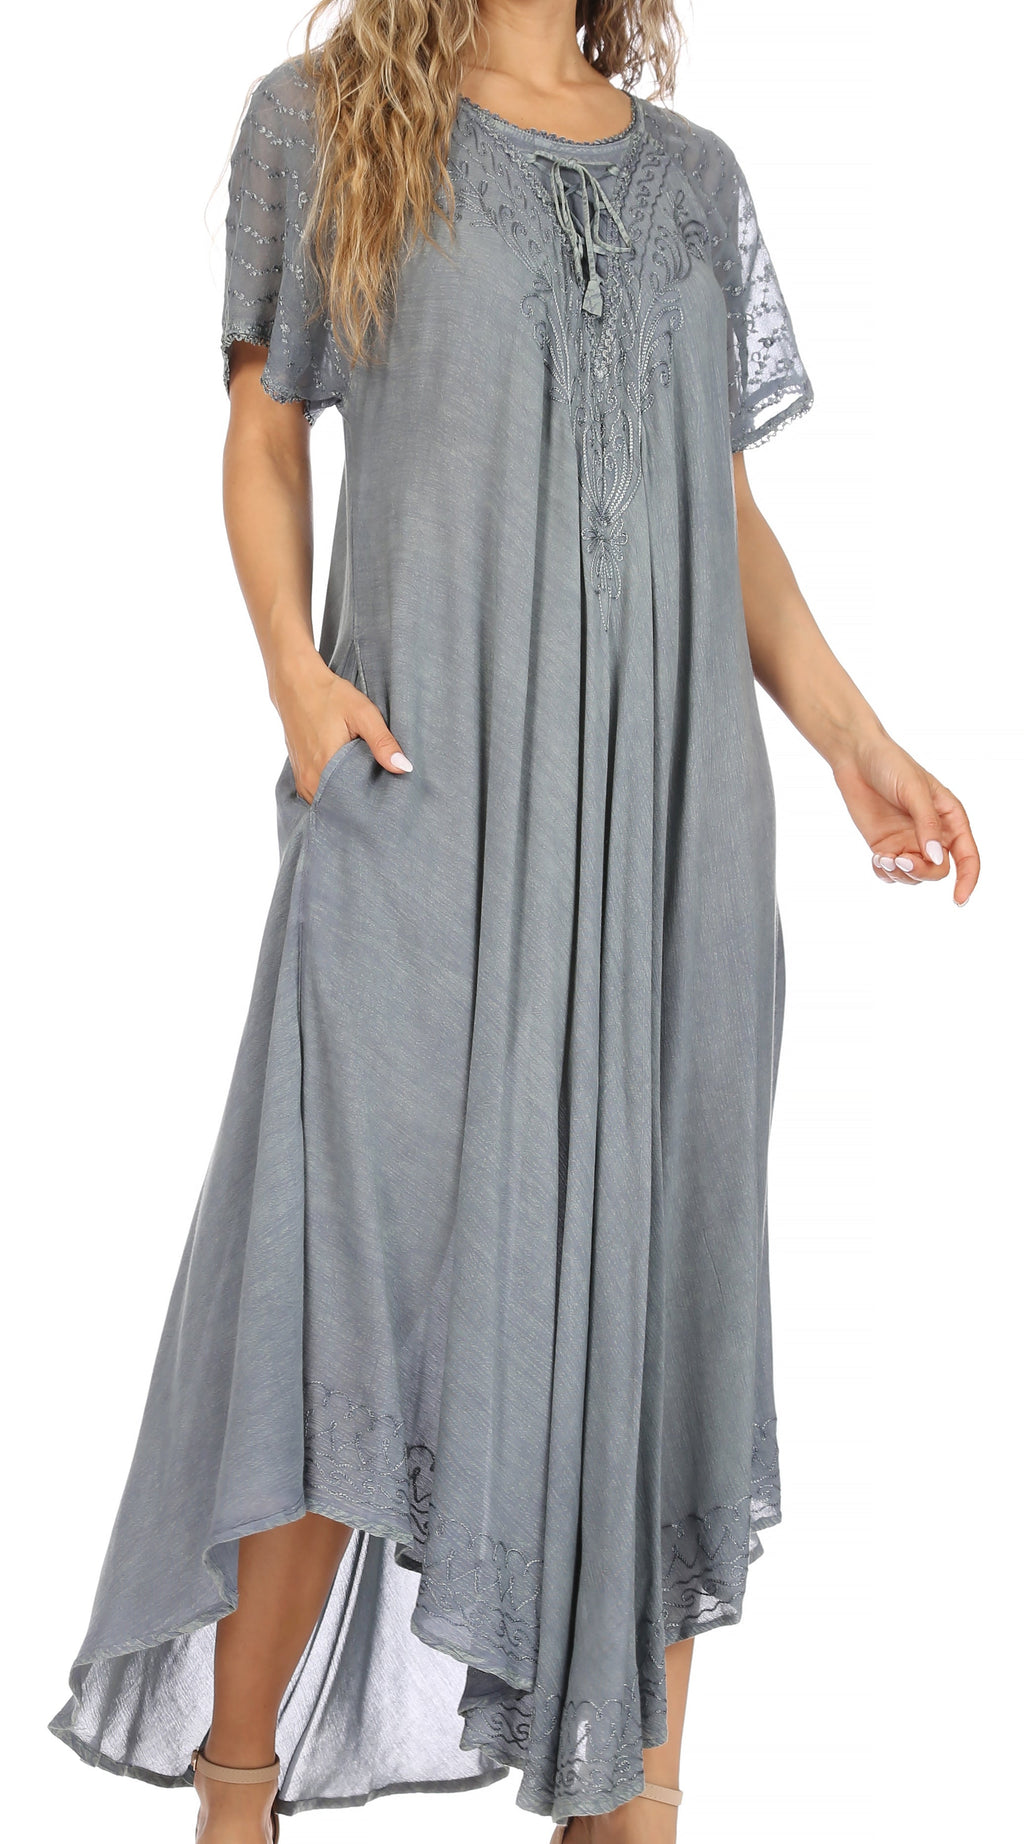 Sakkas Egan Women's Embroidered Caftan Dress w/ Cap Sleeves